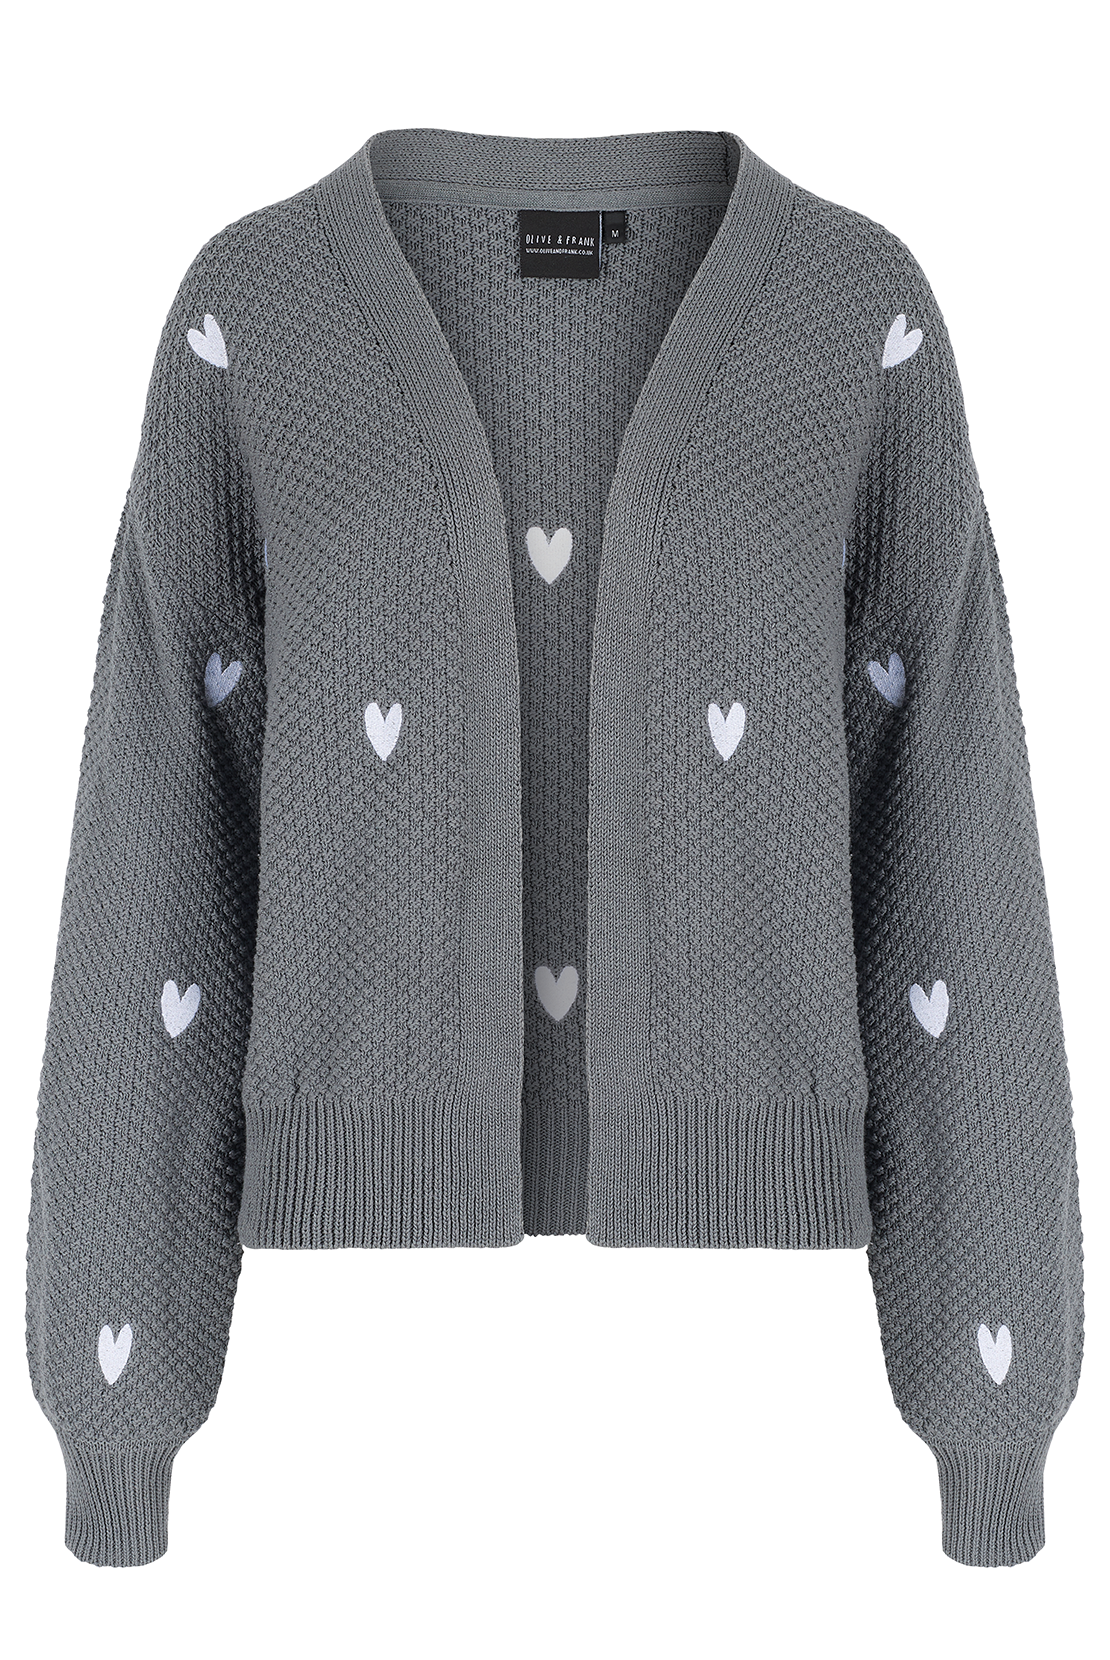 O&F Heart Embroidered Cardigan - Grey